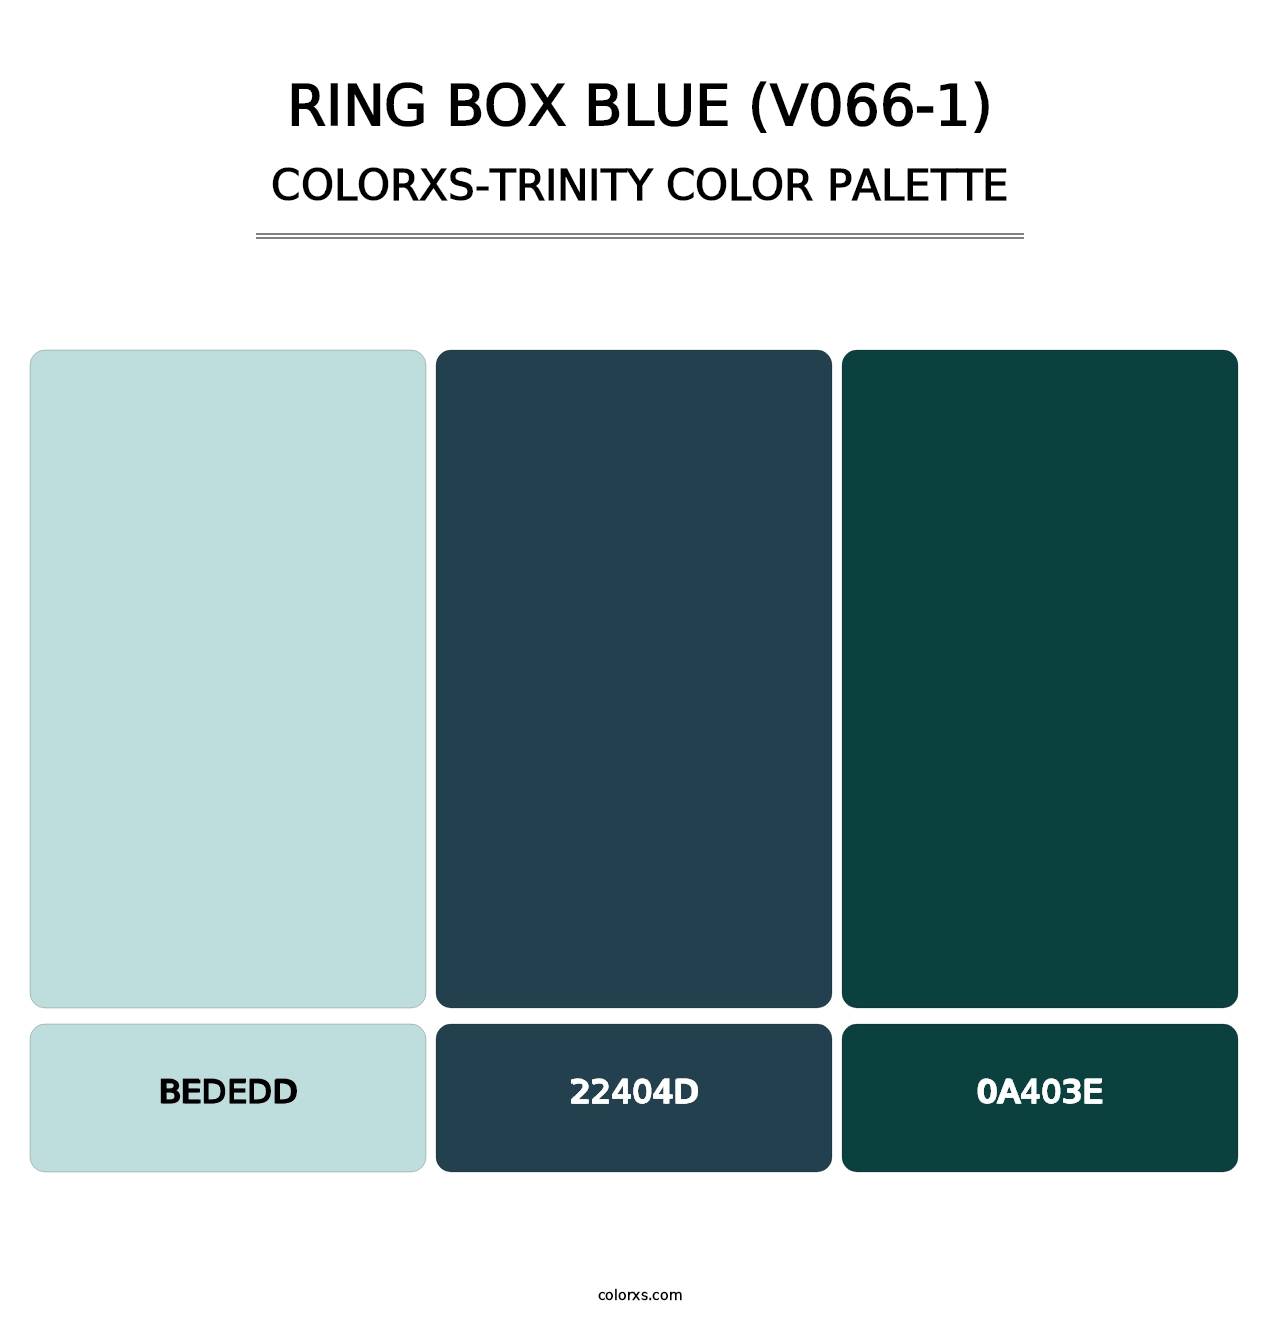 Ring Box Blue (V066-1) - Colorxs Trinity Palette